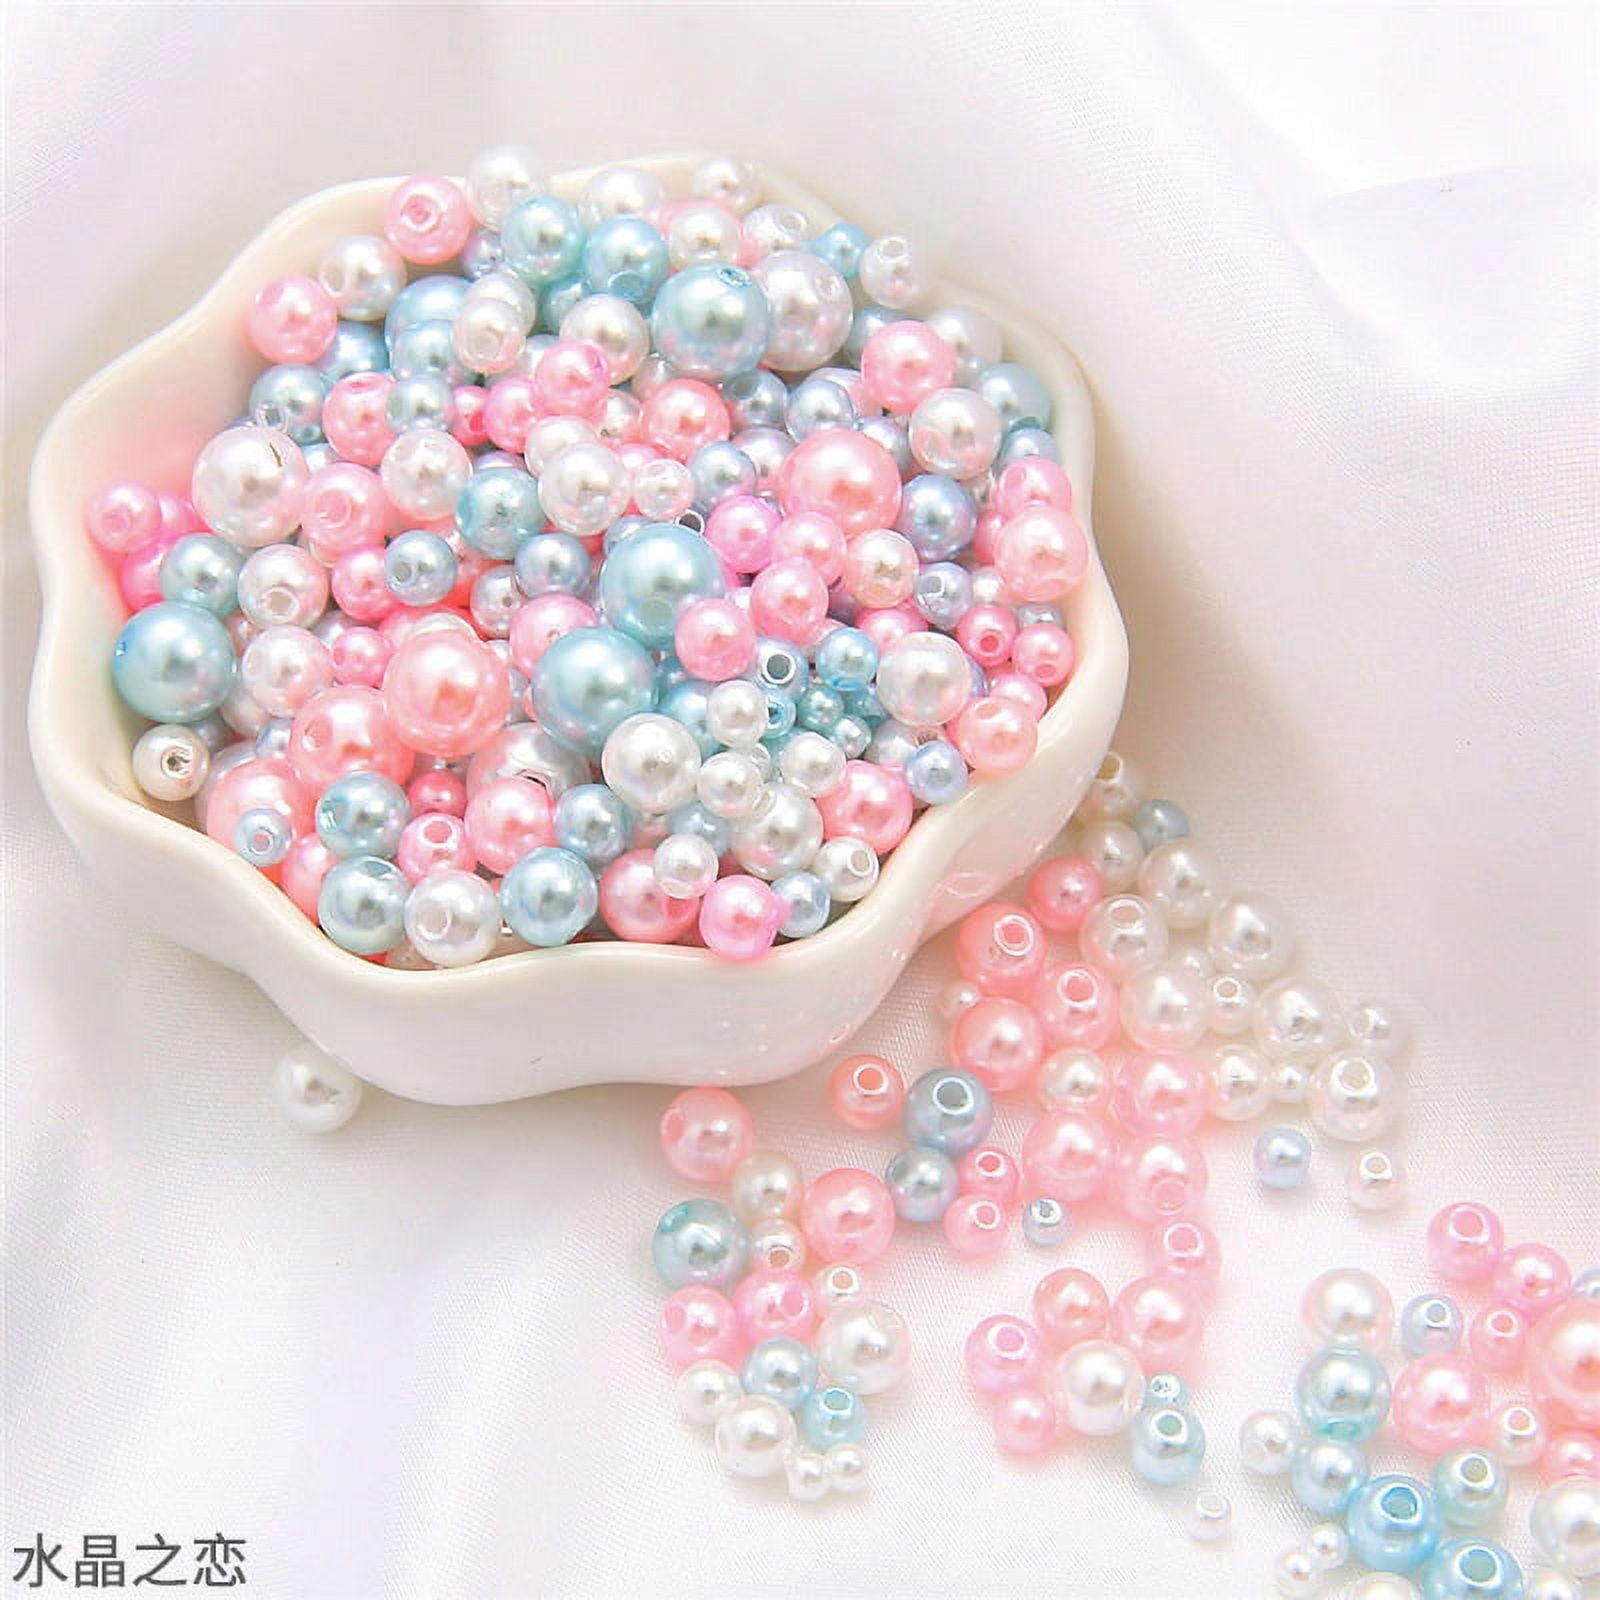 jojofuny 60pcs Game Beads Round Loose Beads Round Pearl Beads Imitation  Pearls Bead DIY Crafts Beads Makeup Beads Spacer Beads Circle Beads Plastic